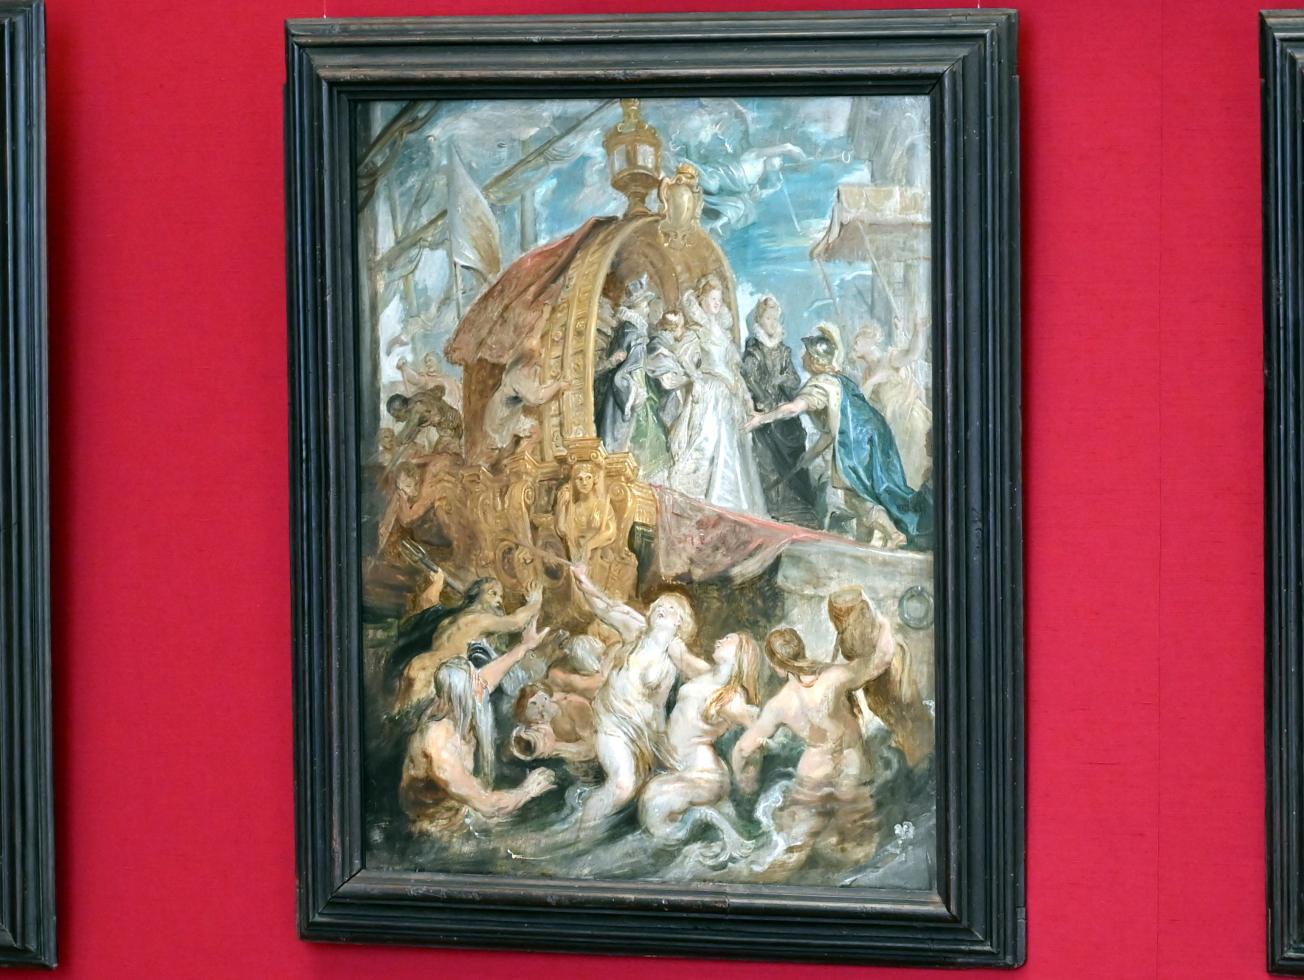 Peter Paul Rubens (1598–1640), Die Landung in Marseille (Skizze zum Medici-Zyklus), München, Alte Pinakothek, Obergeschoss Kabinett 12, 1622